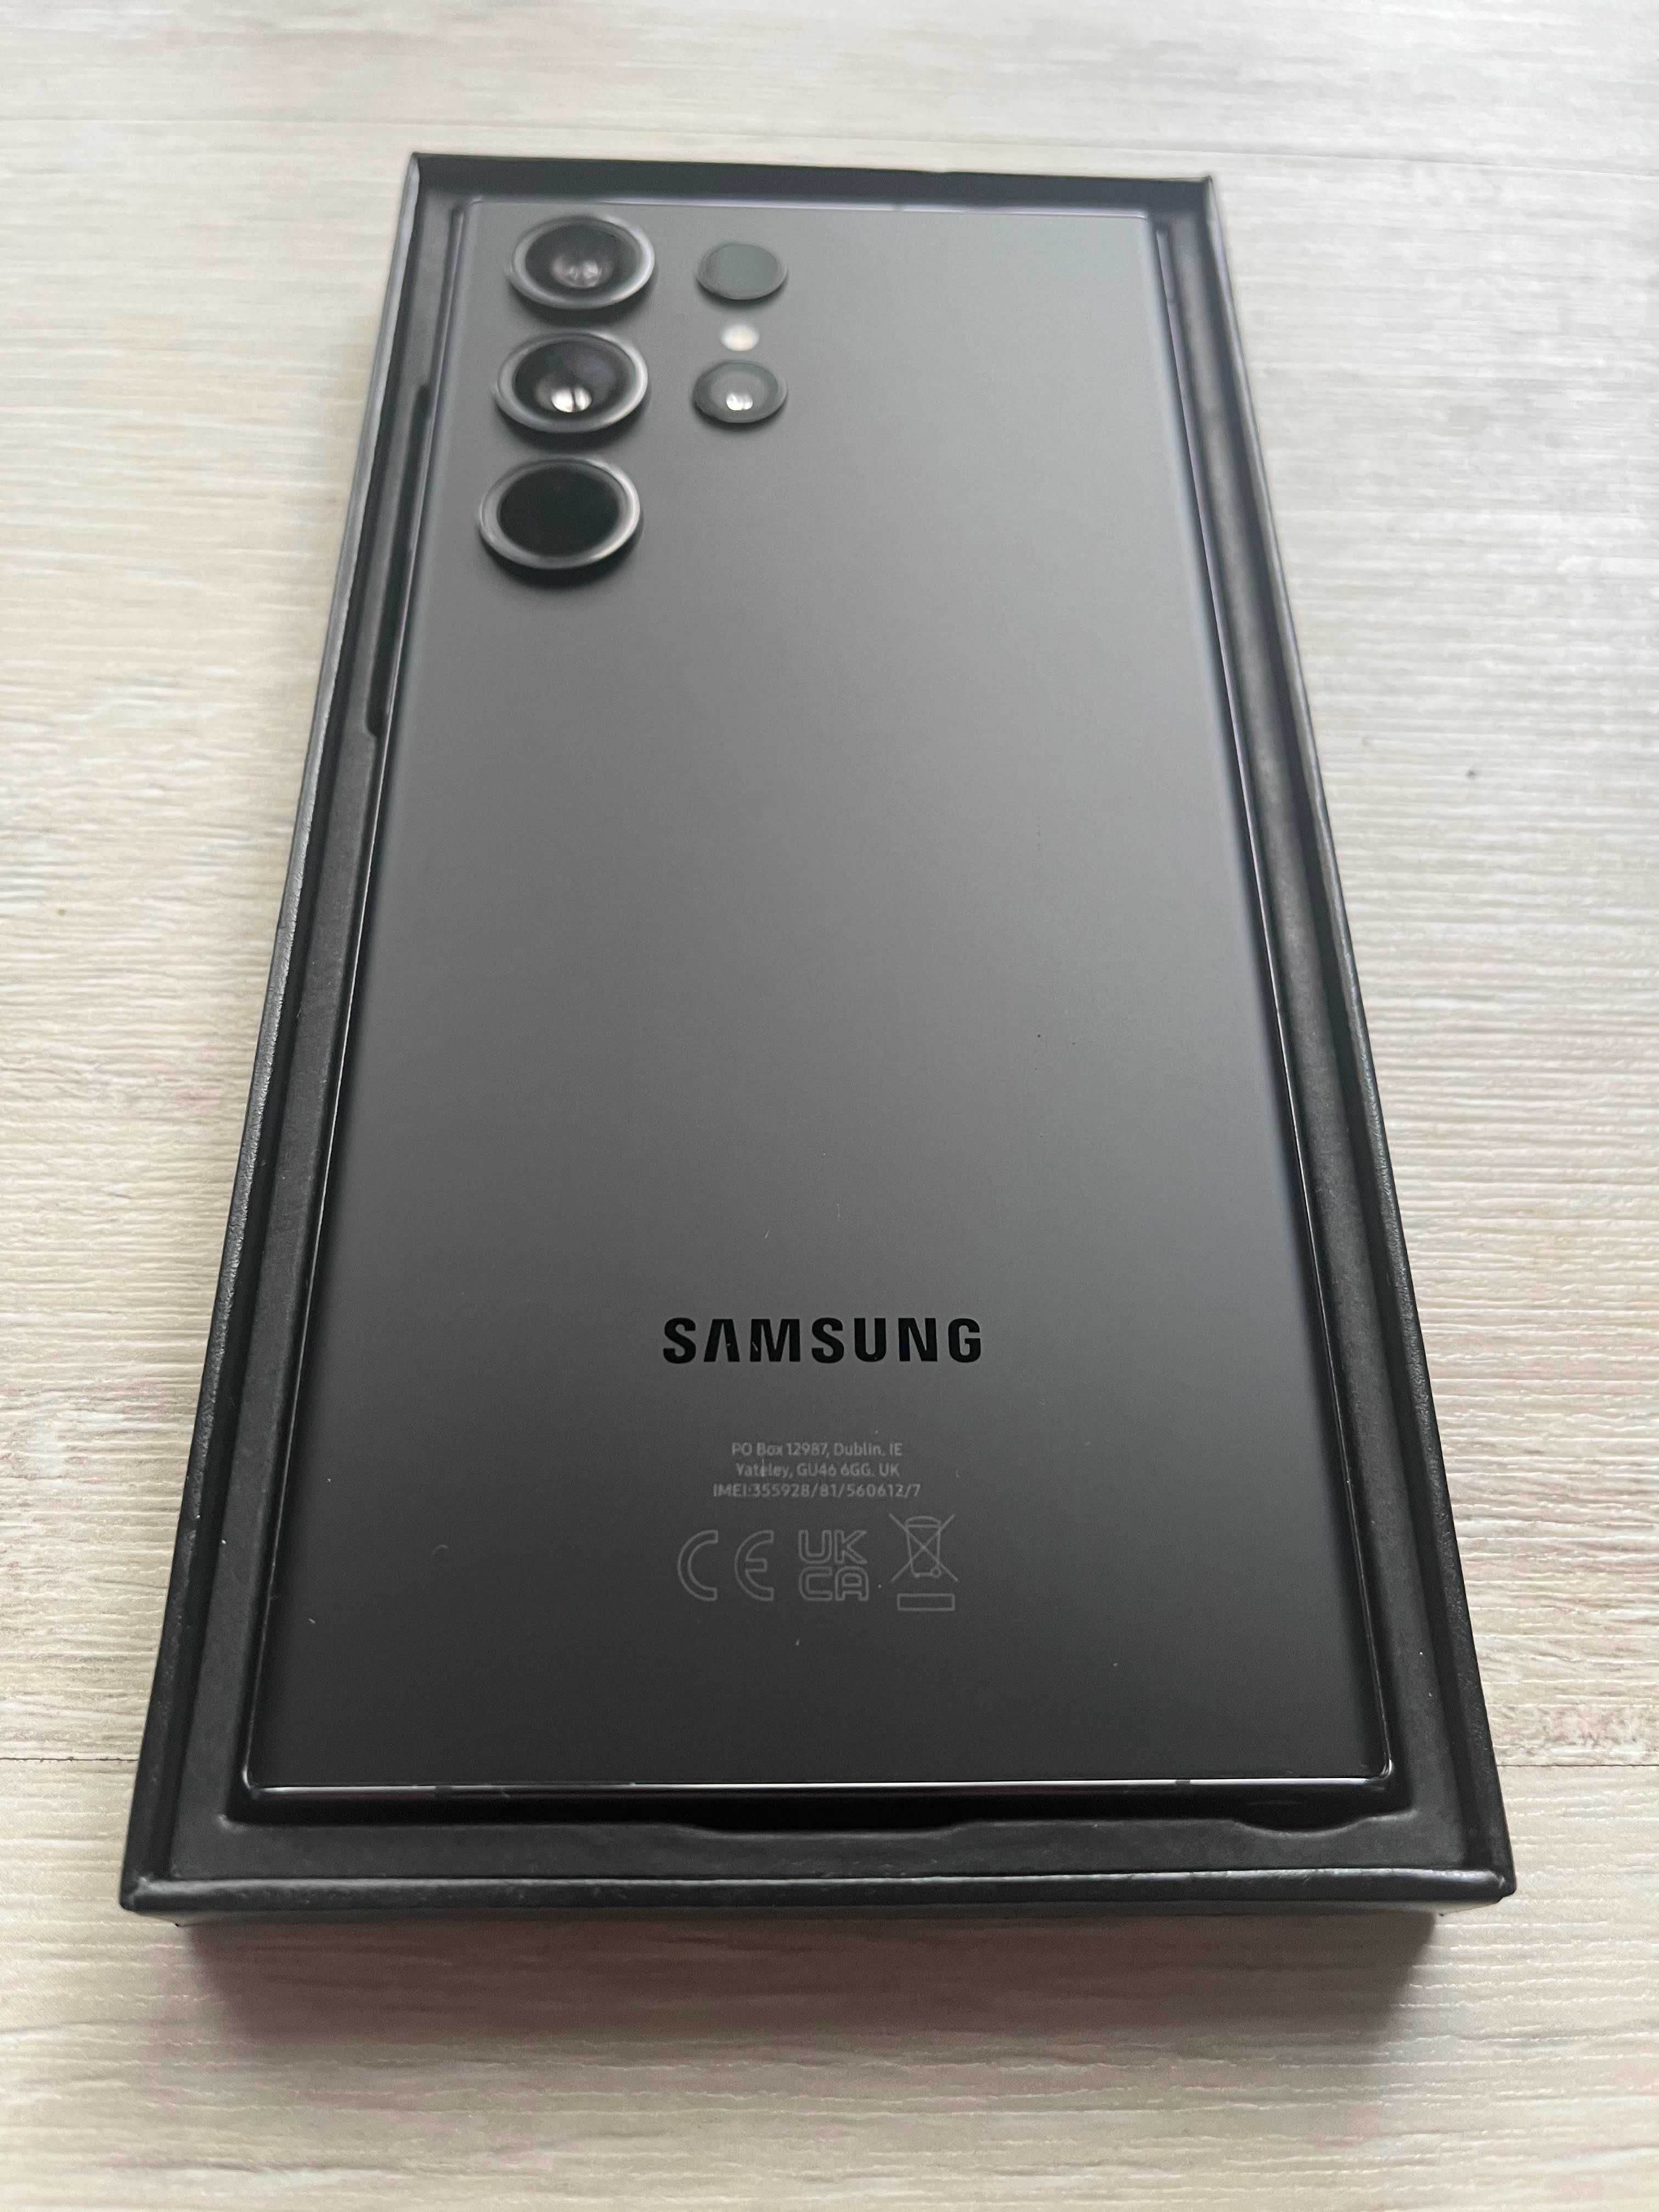 SKLEP Samsung Galaxy S23 Ultra 8GB/256GB Czarny Gwarancja Faktura 23%